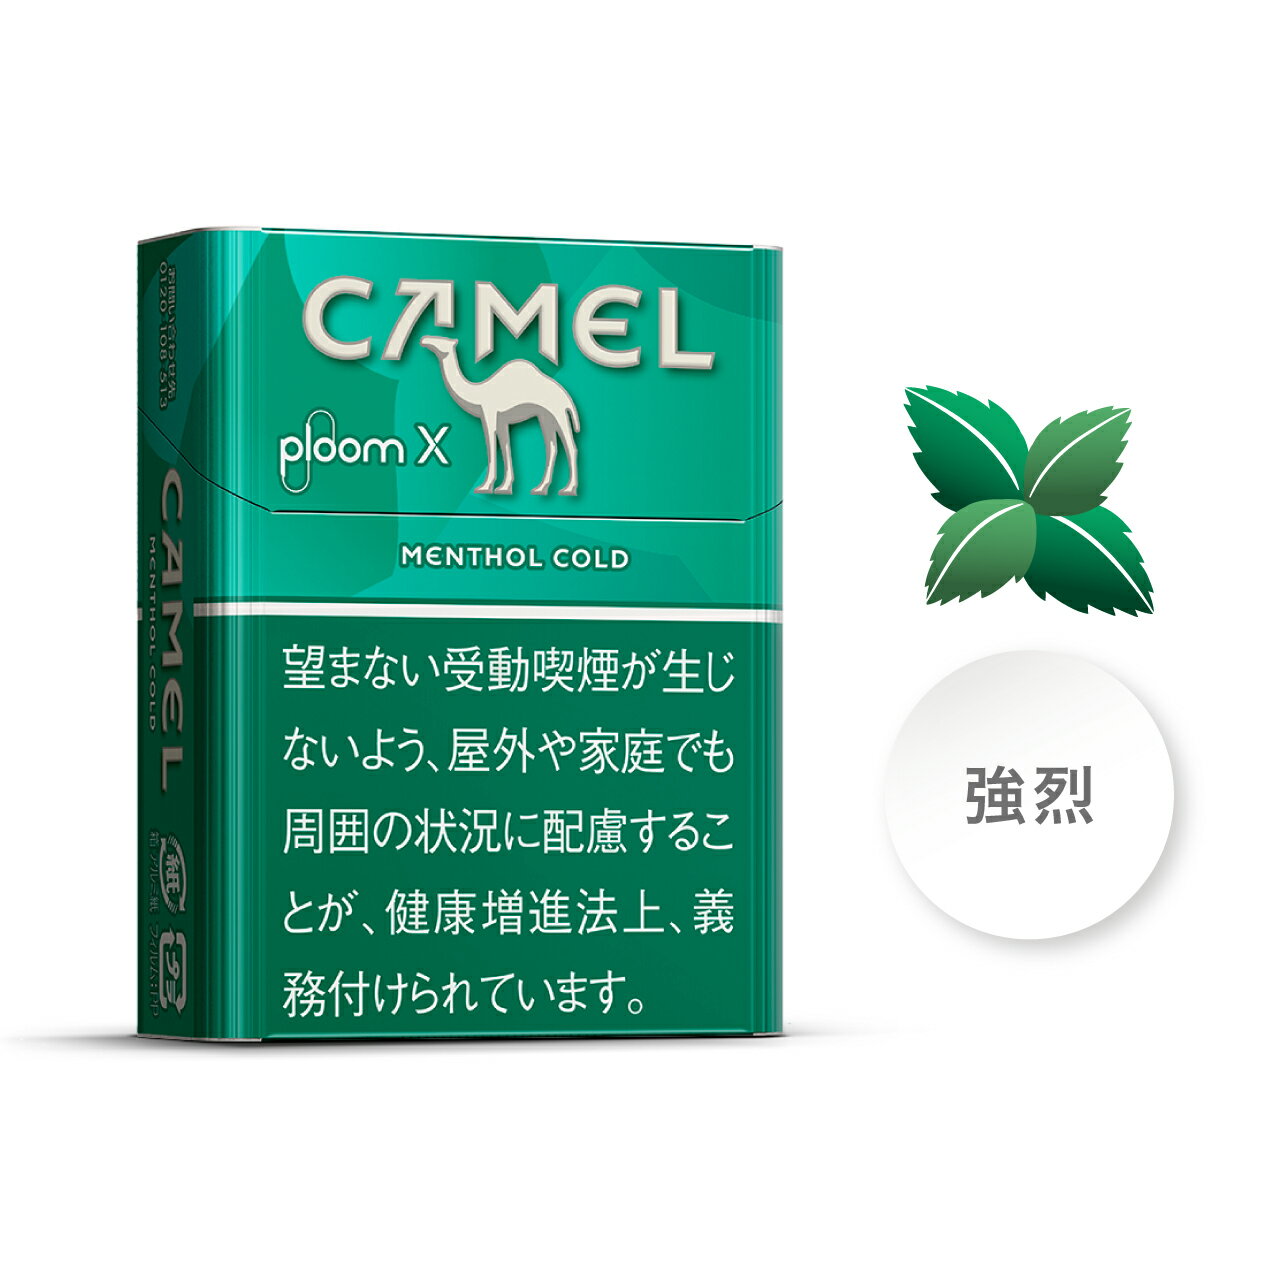 Camel Menthol Cold Ploom X :2＋snus 1000yen:2